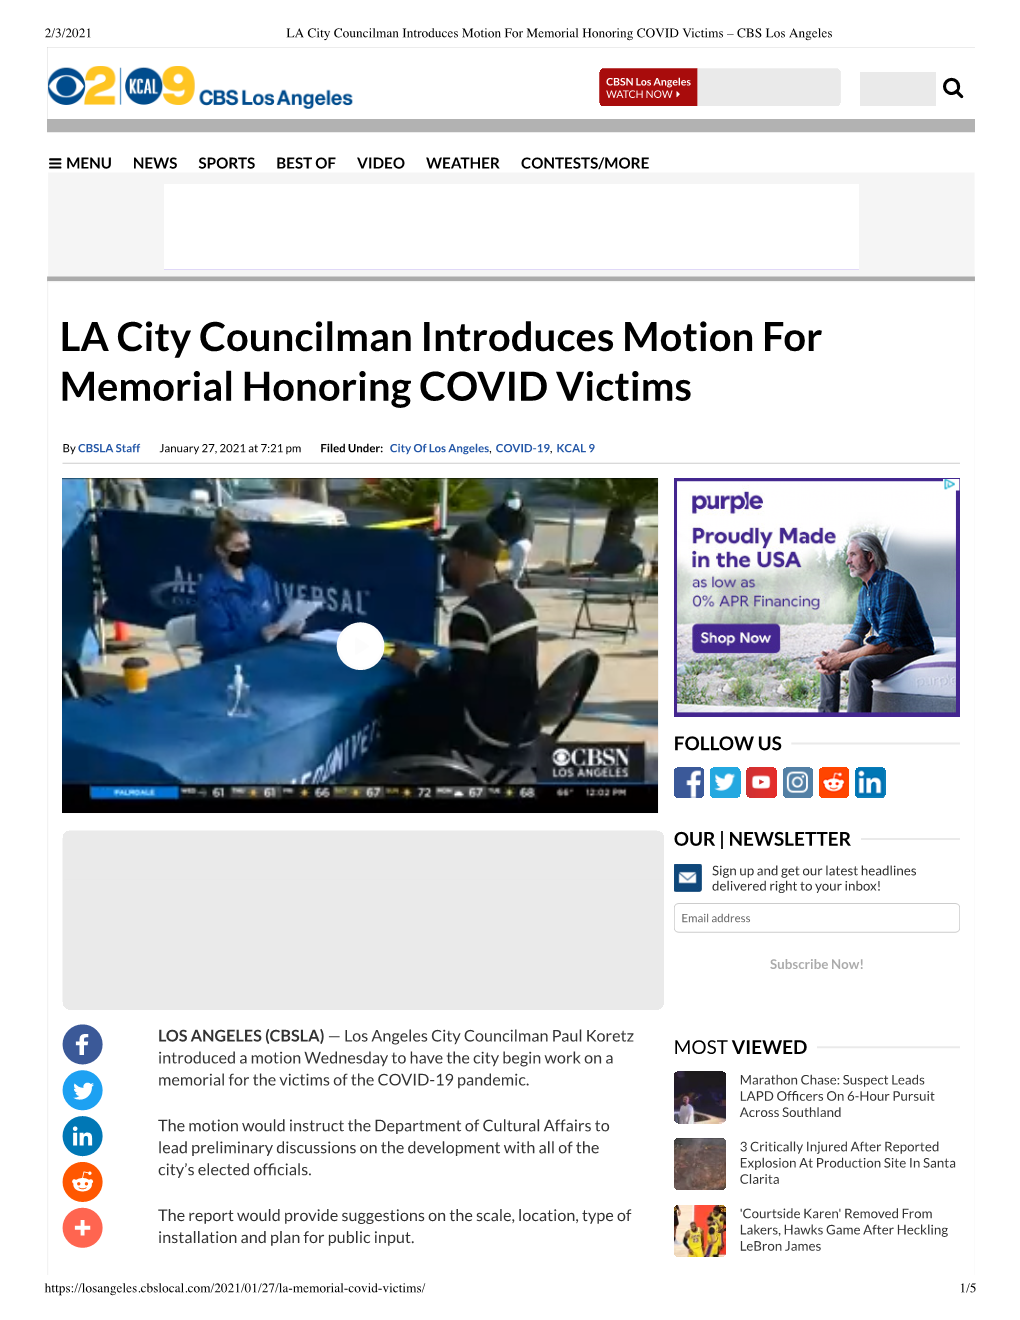 LA City Councilman Introduces Motion for Memorial Honoring COVID Victims – CBS Los Angeles